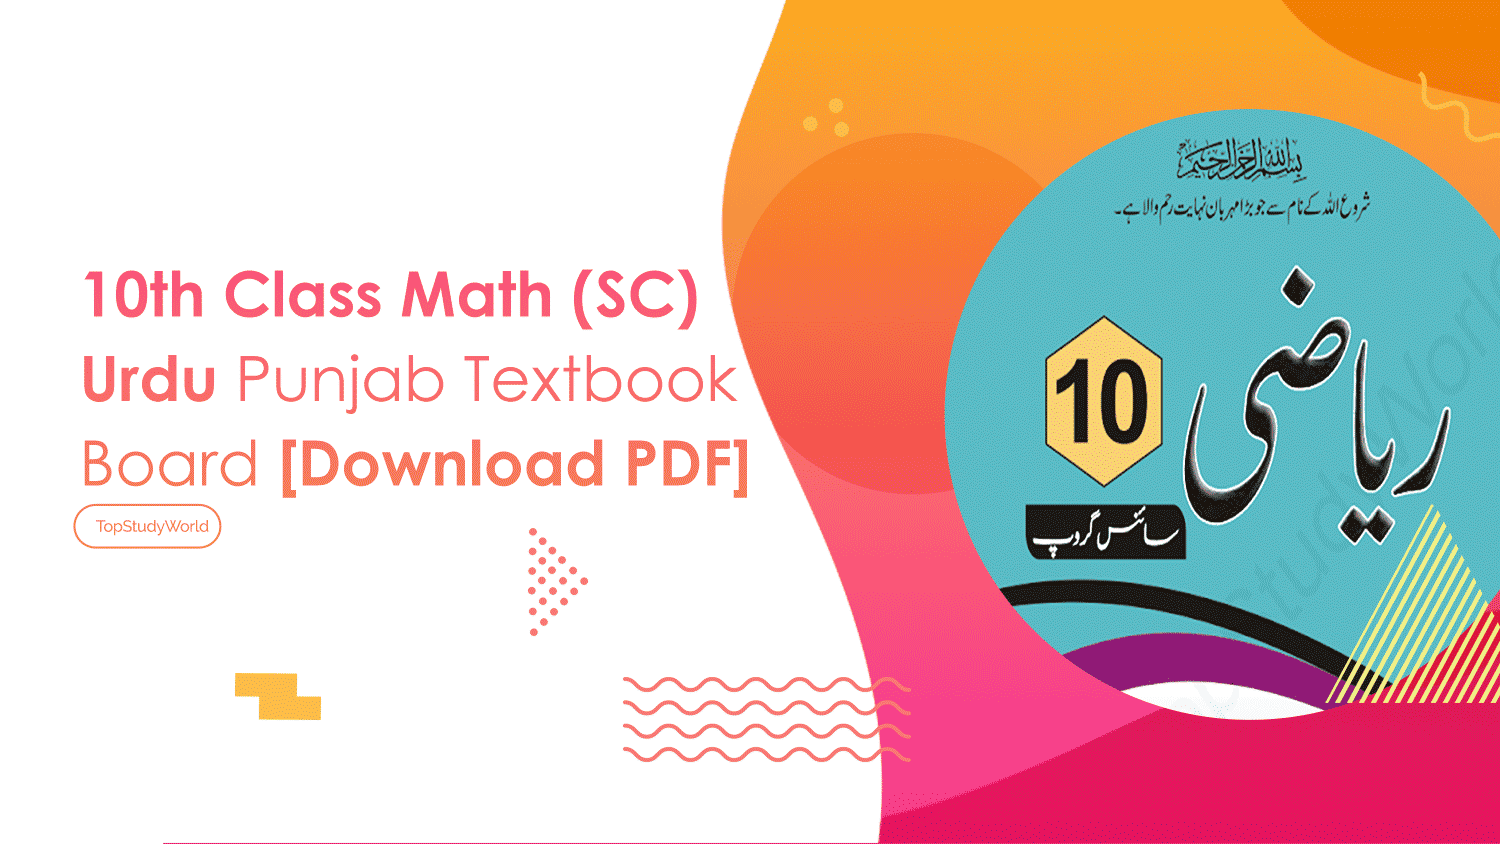 10th Class Math (SC) Urdu Punjab Textbook Board [Download PDF]